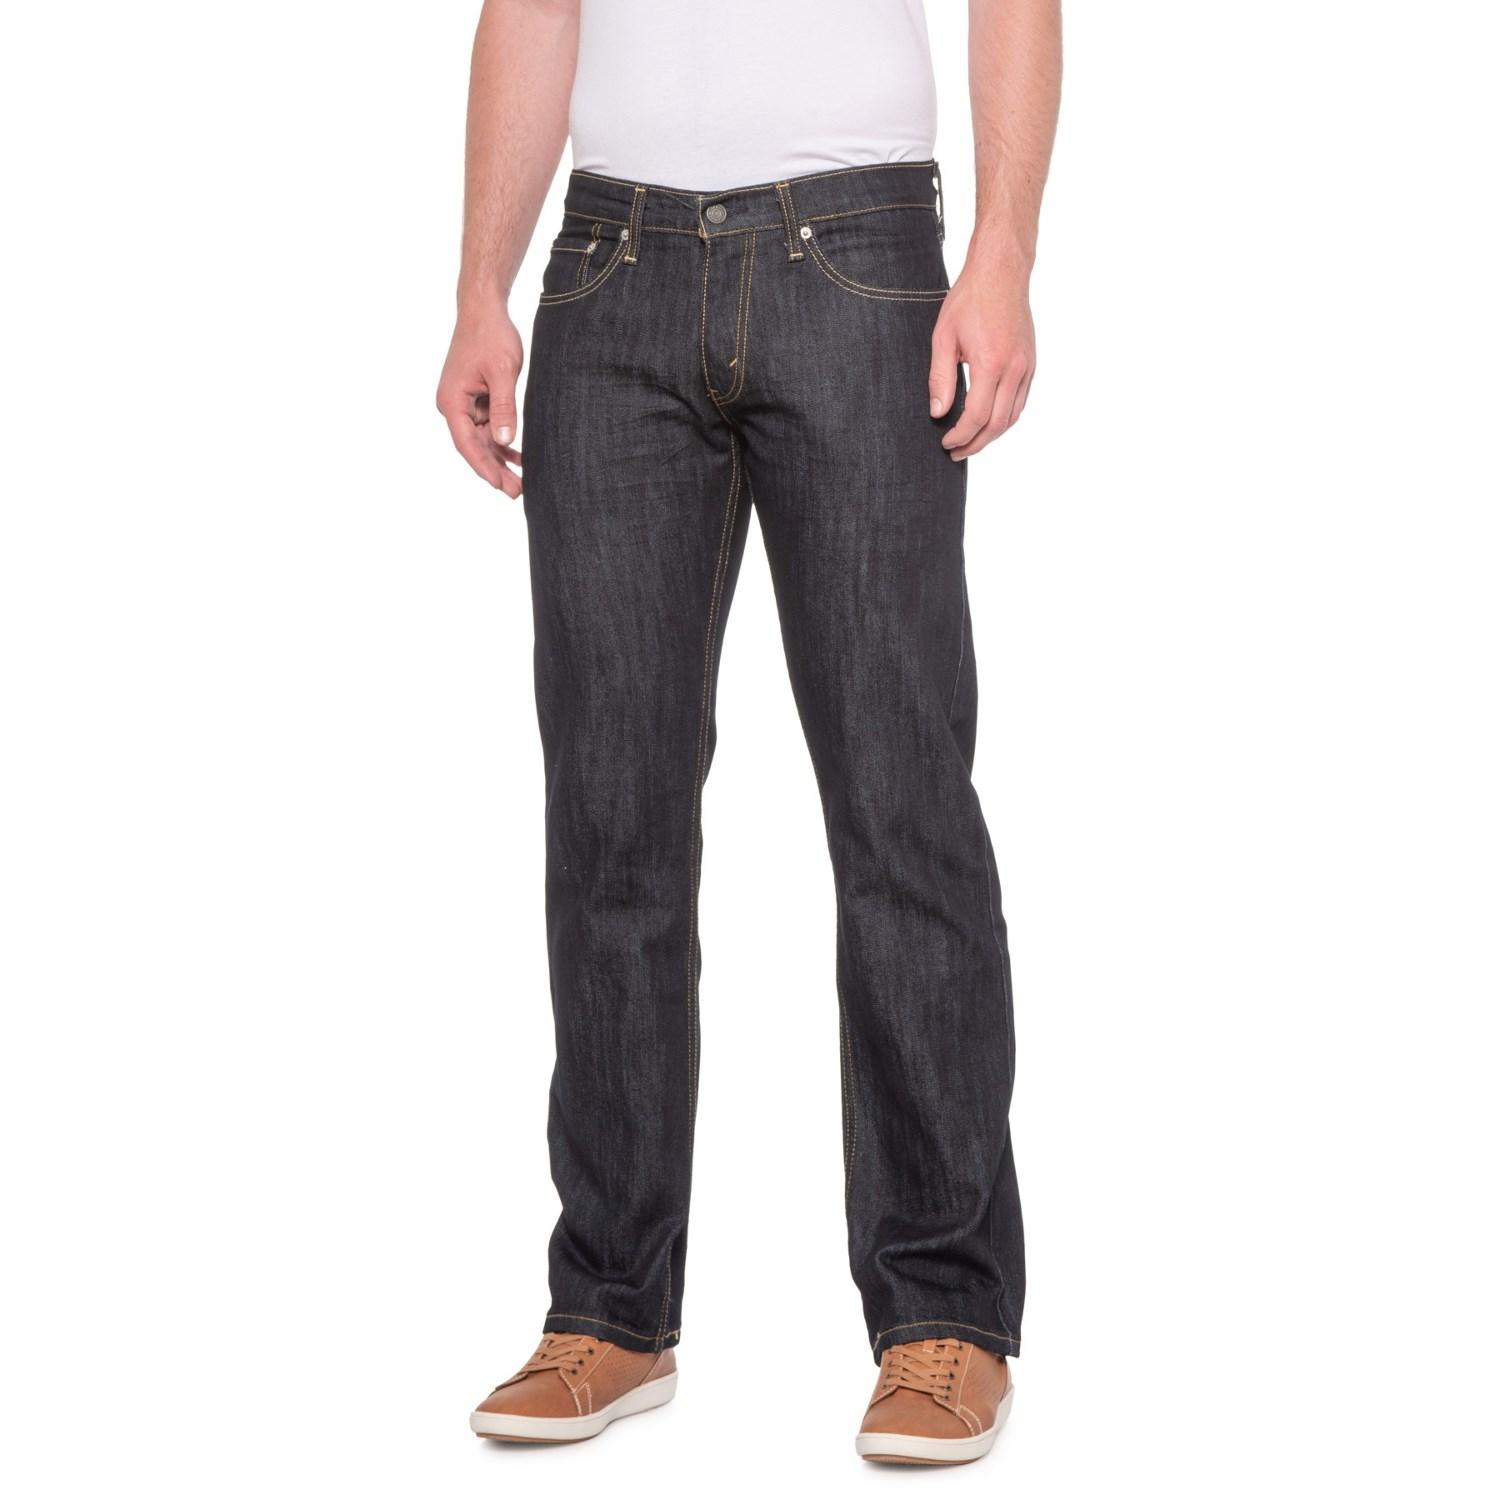 Levi's Denim Illusion Denizen 218 Straight Fit Jeans in Gray for Men - Lyst